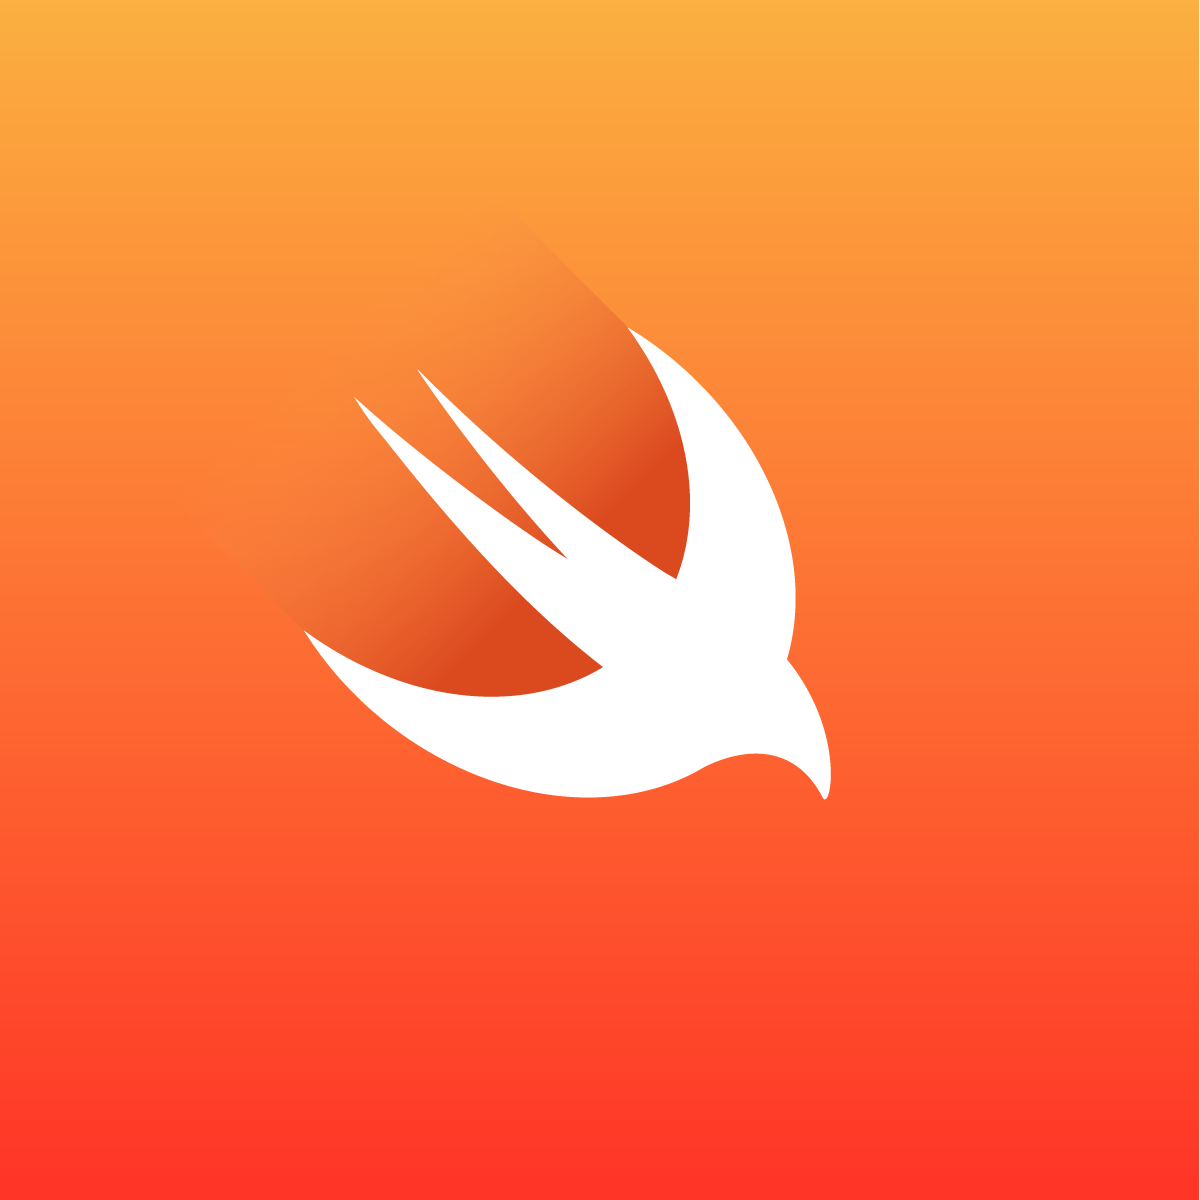 iOS Development with Swift/Objective-C